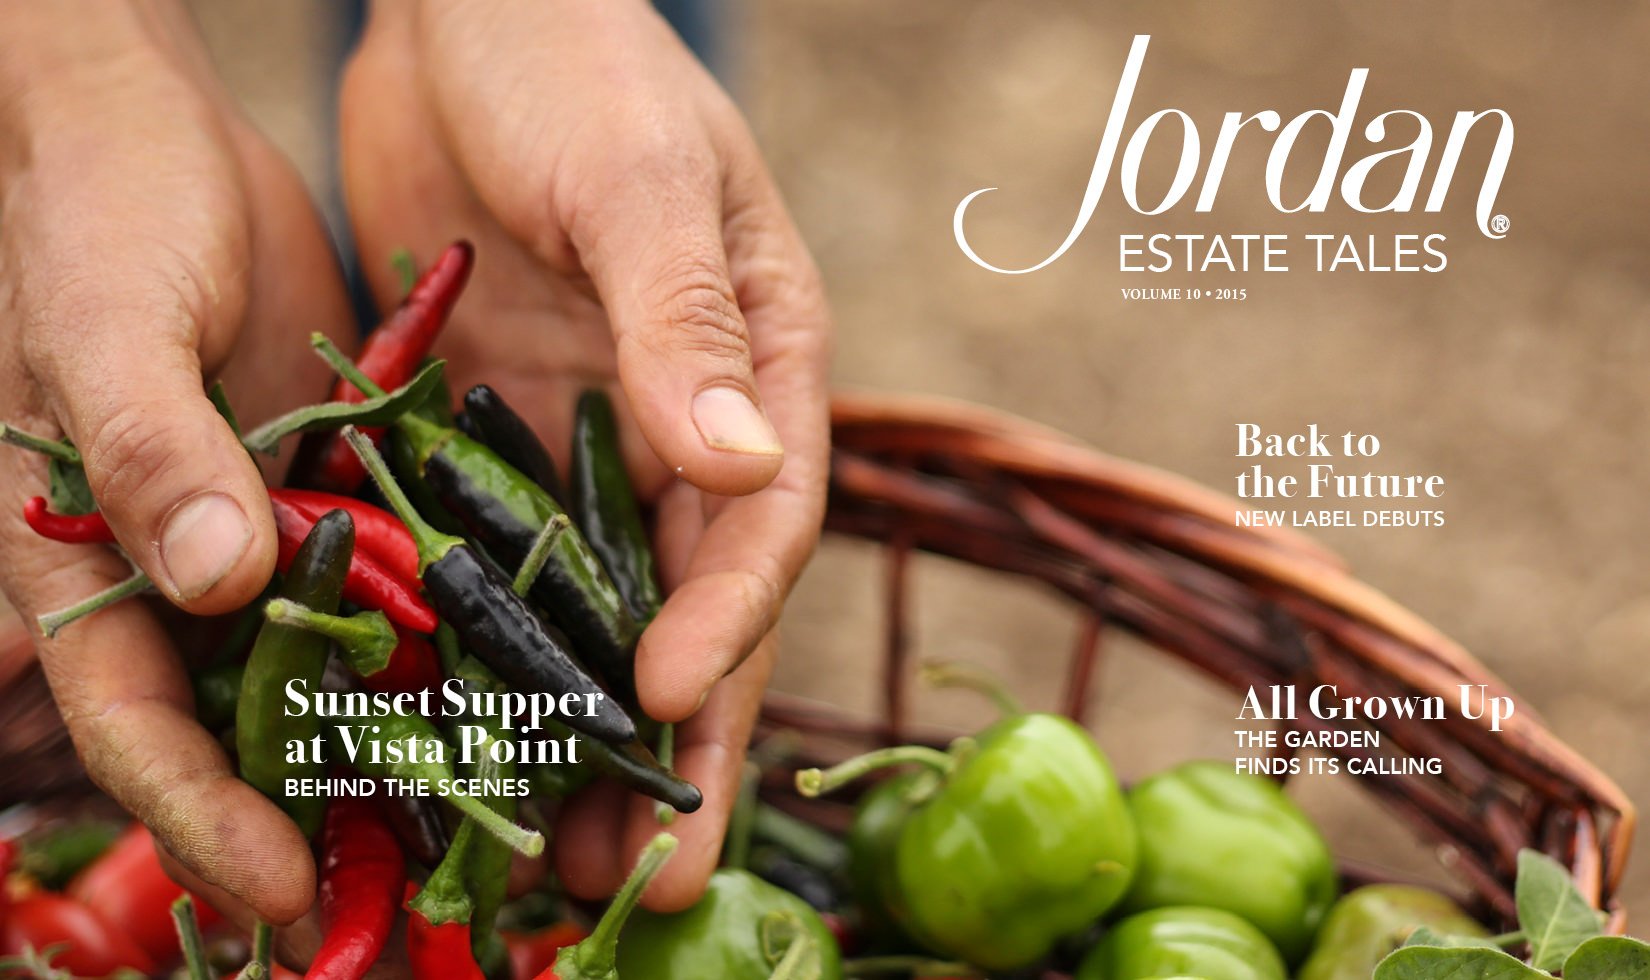 cover page for Jordan Estate Tales Volume 10, 2015